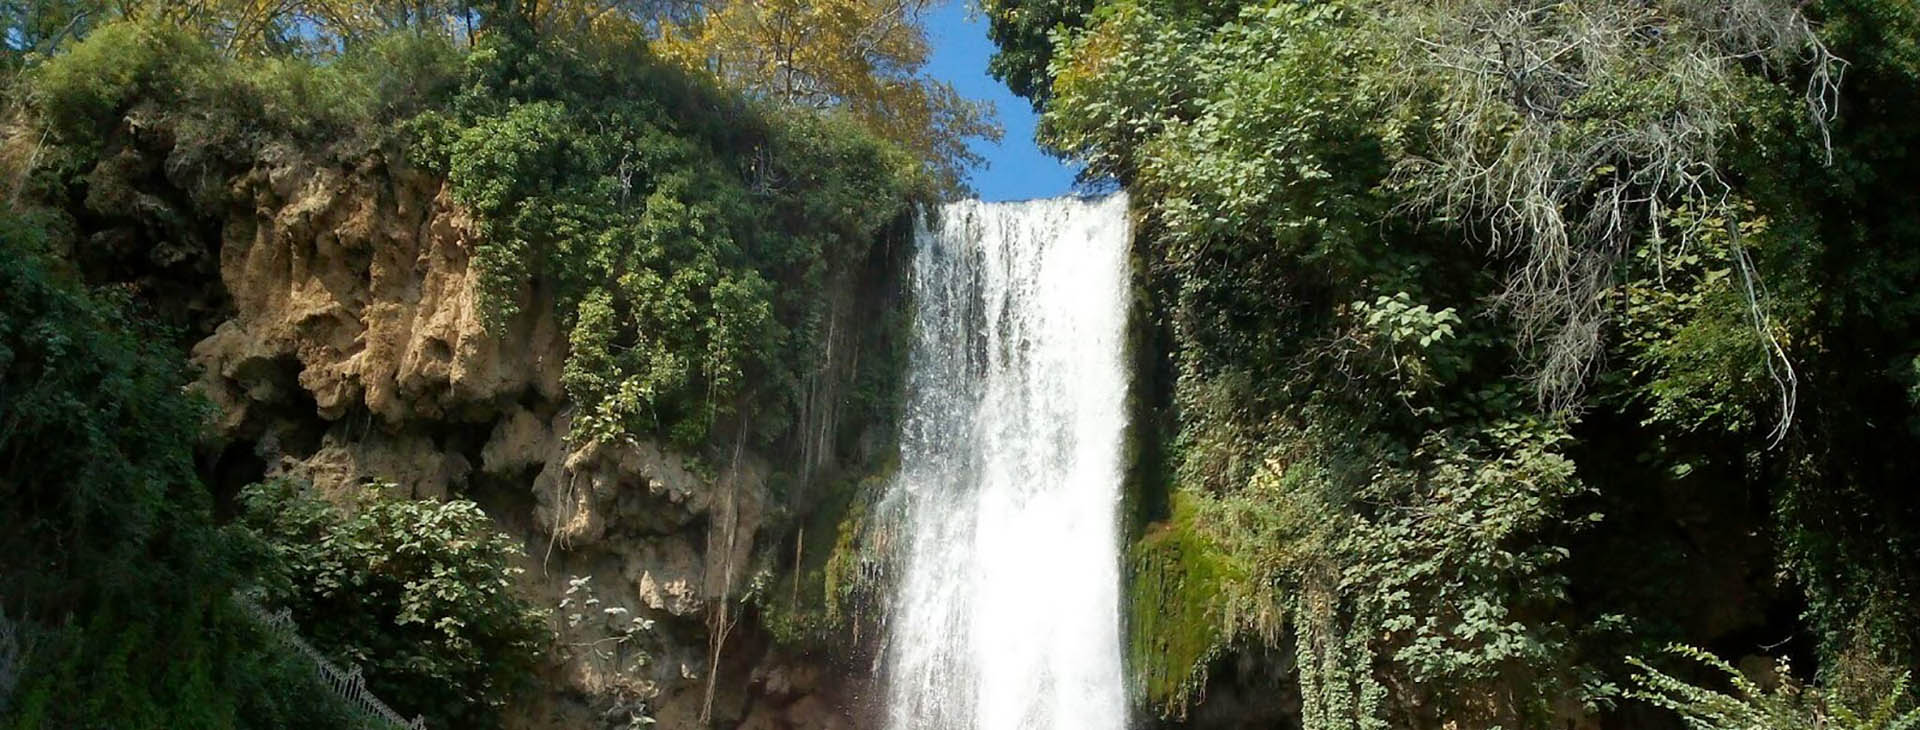 Edessa waterfalls, Pella